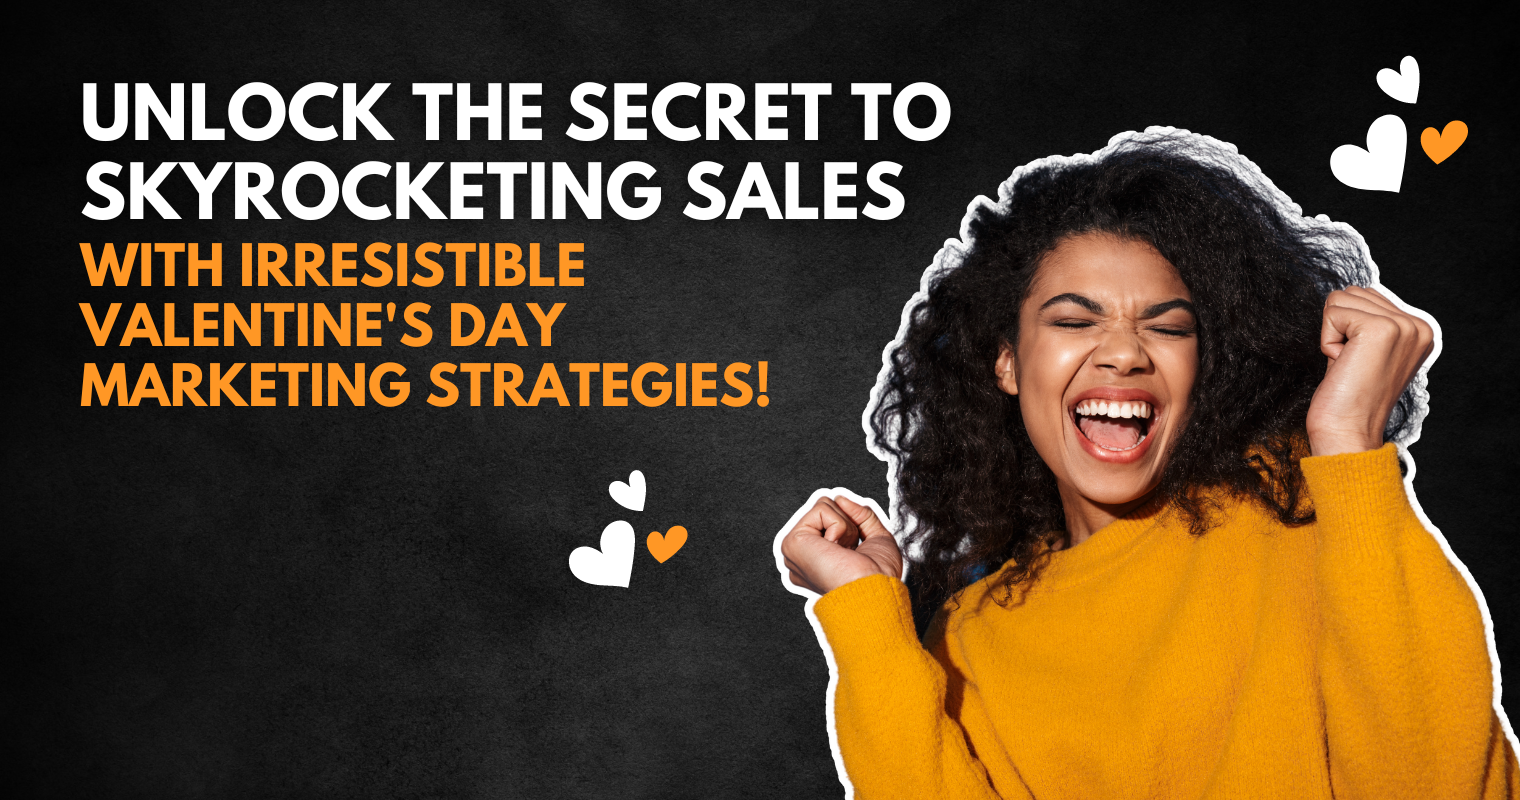 Unlock the Secret to Skyrocketing Sales with Irresistible Valentine’s Day Marketing Strategies!